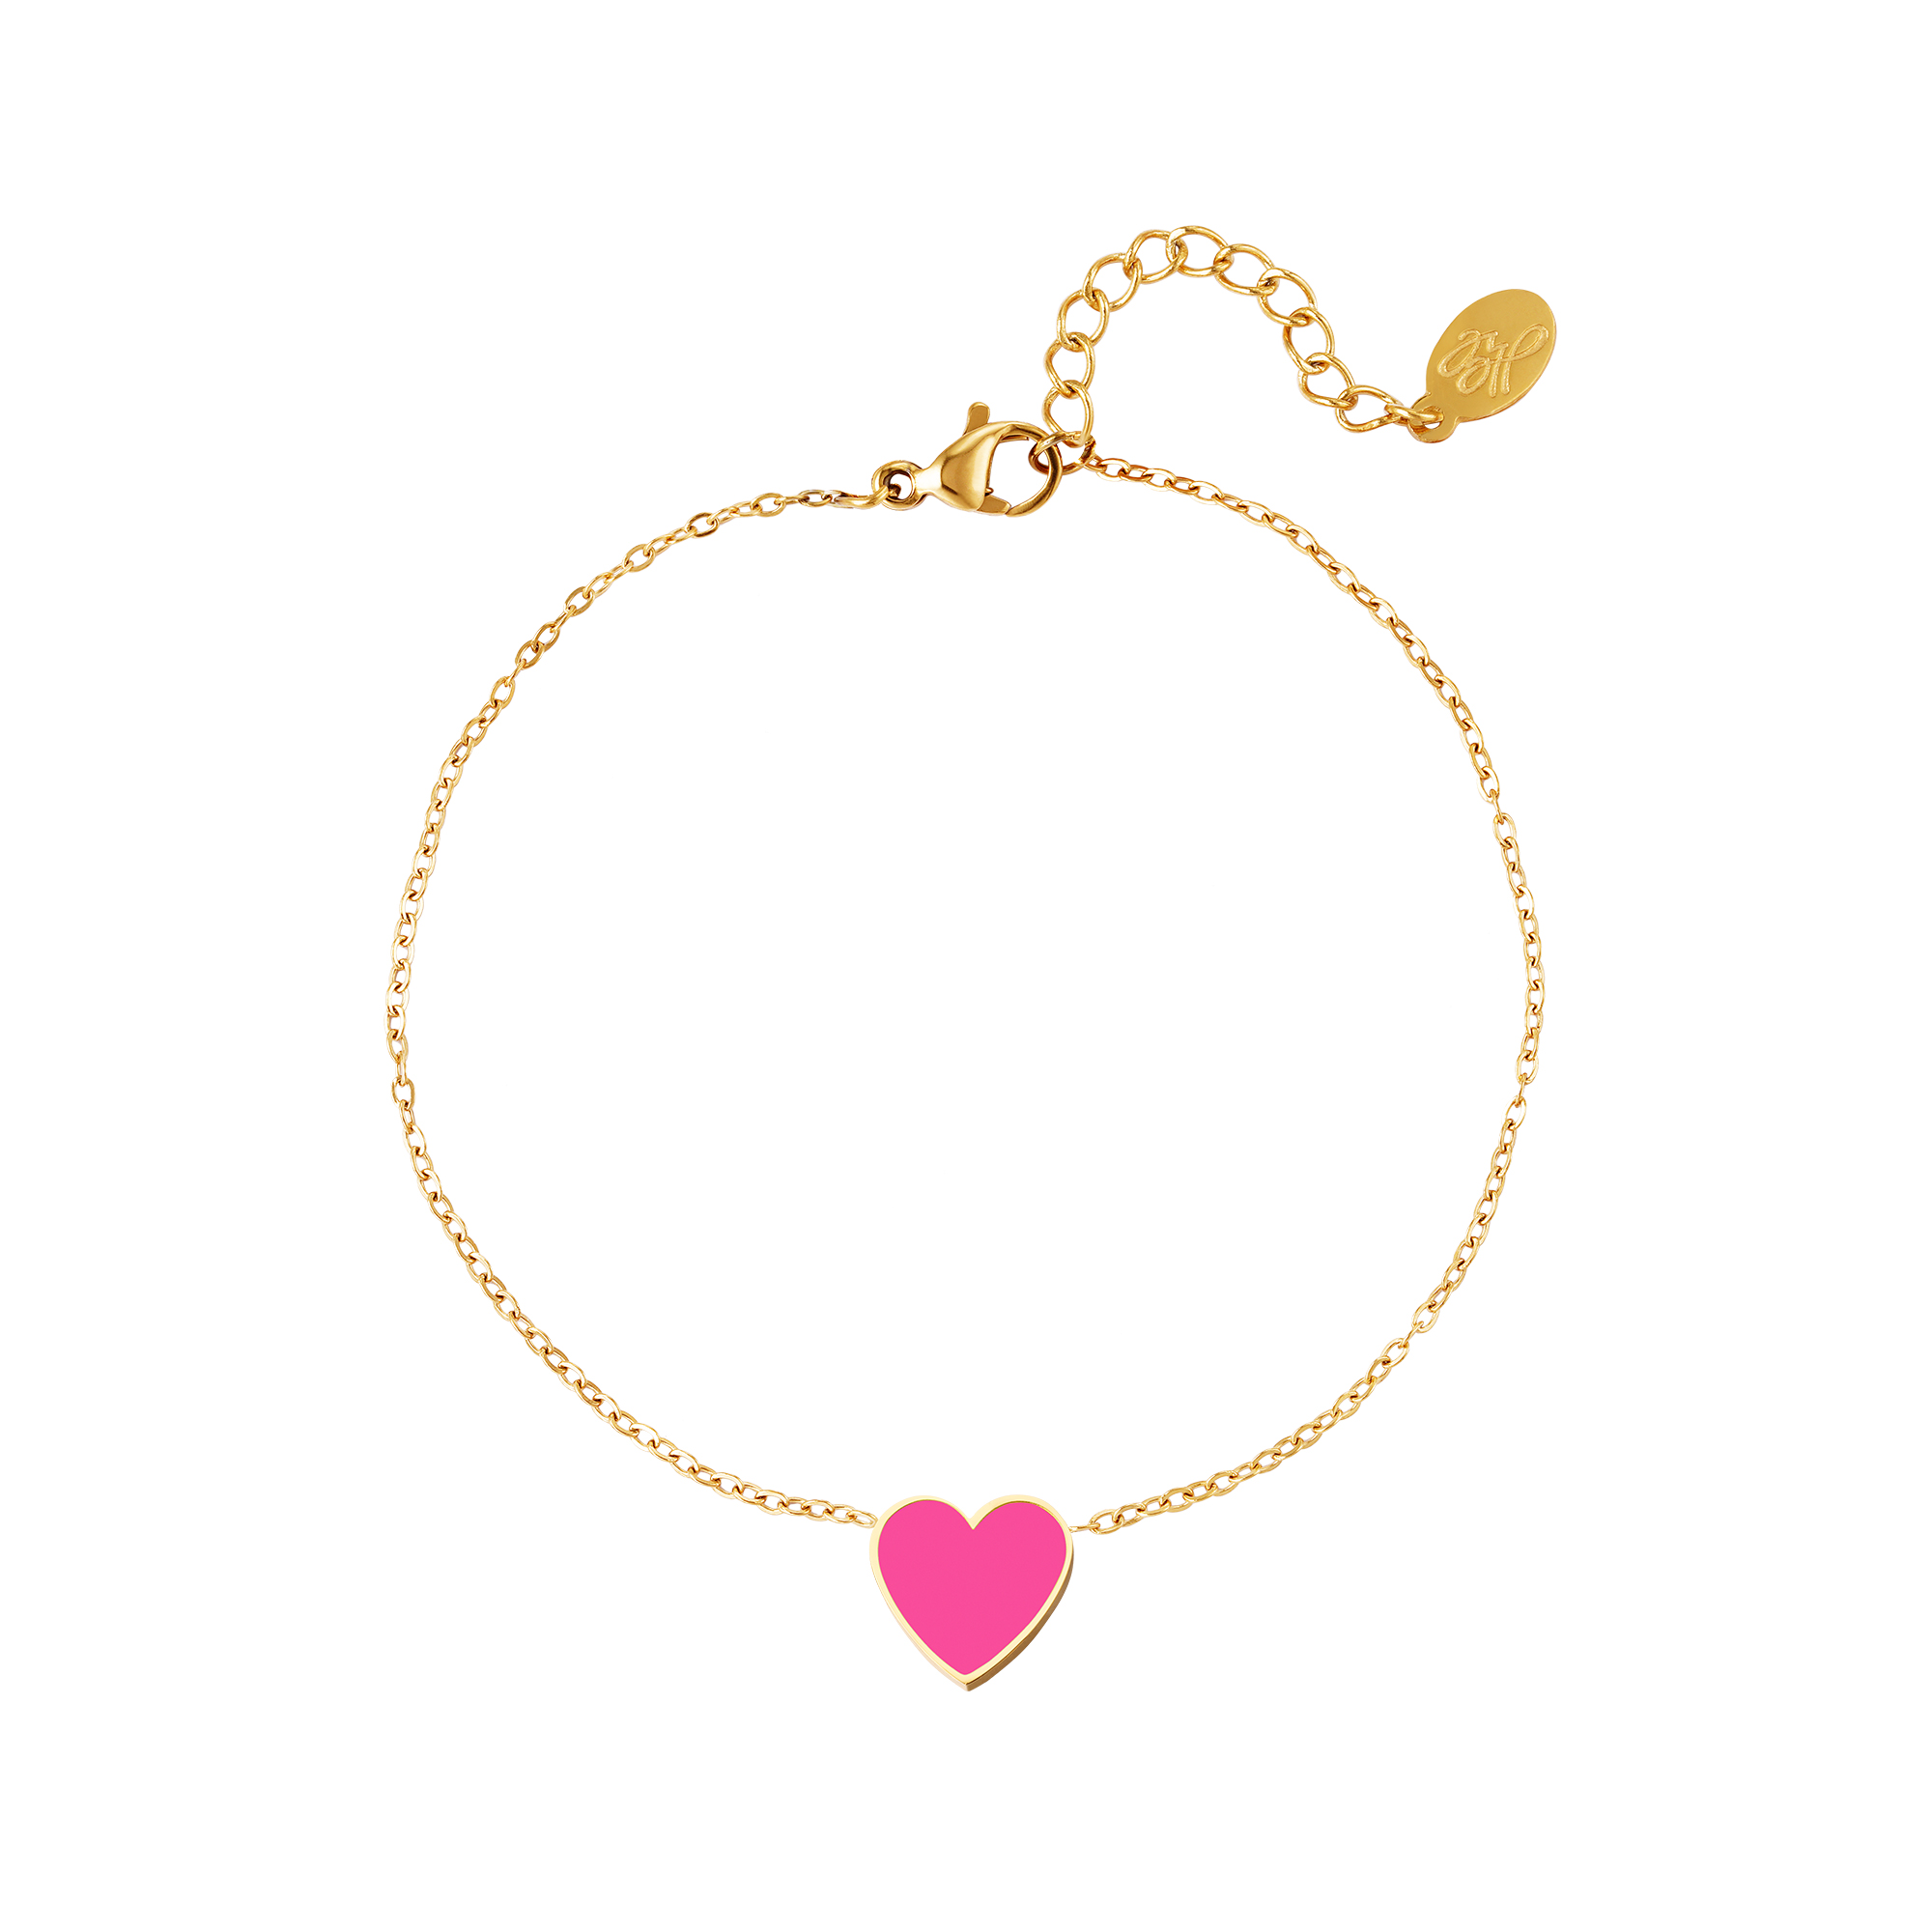 RVS Armband Colorful Heart roze gouden armband met fuchsia roze hartje fashion sieraden kopen bestellen